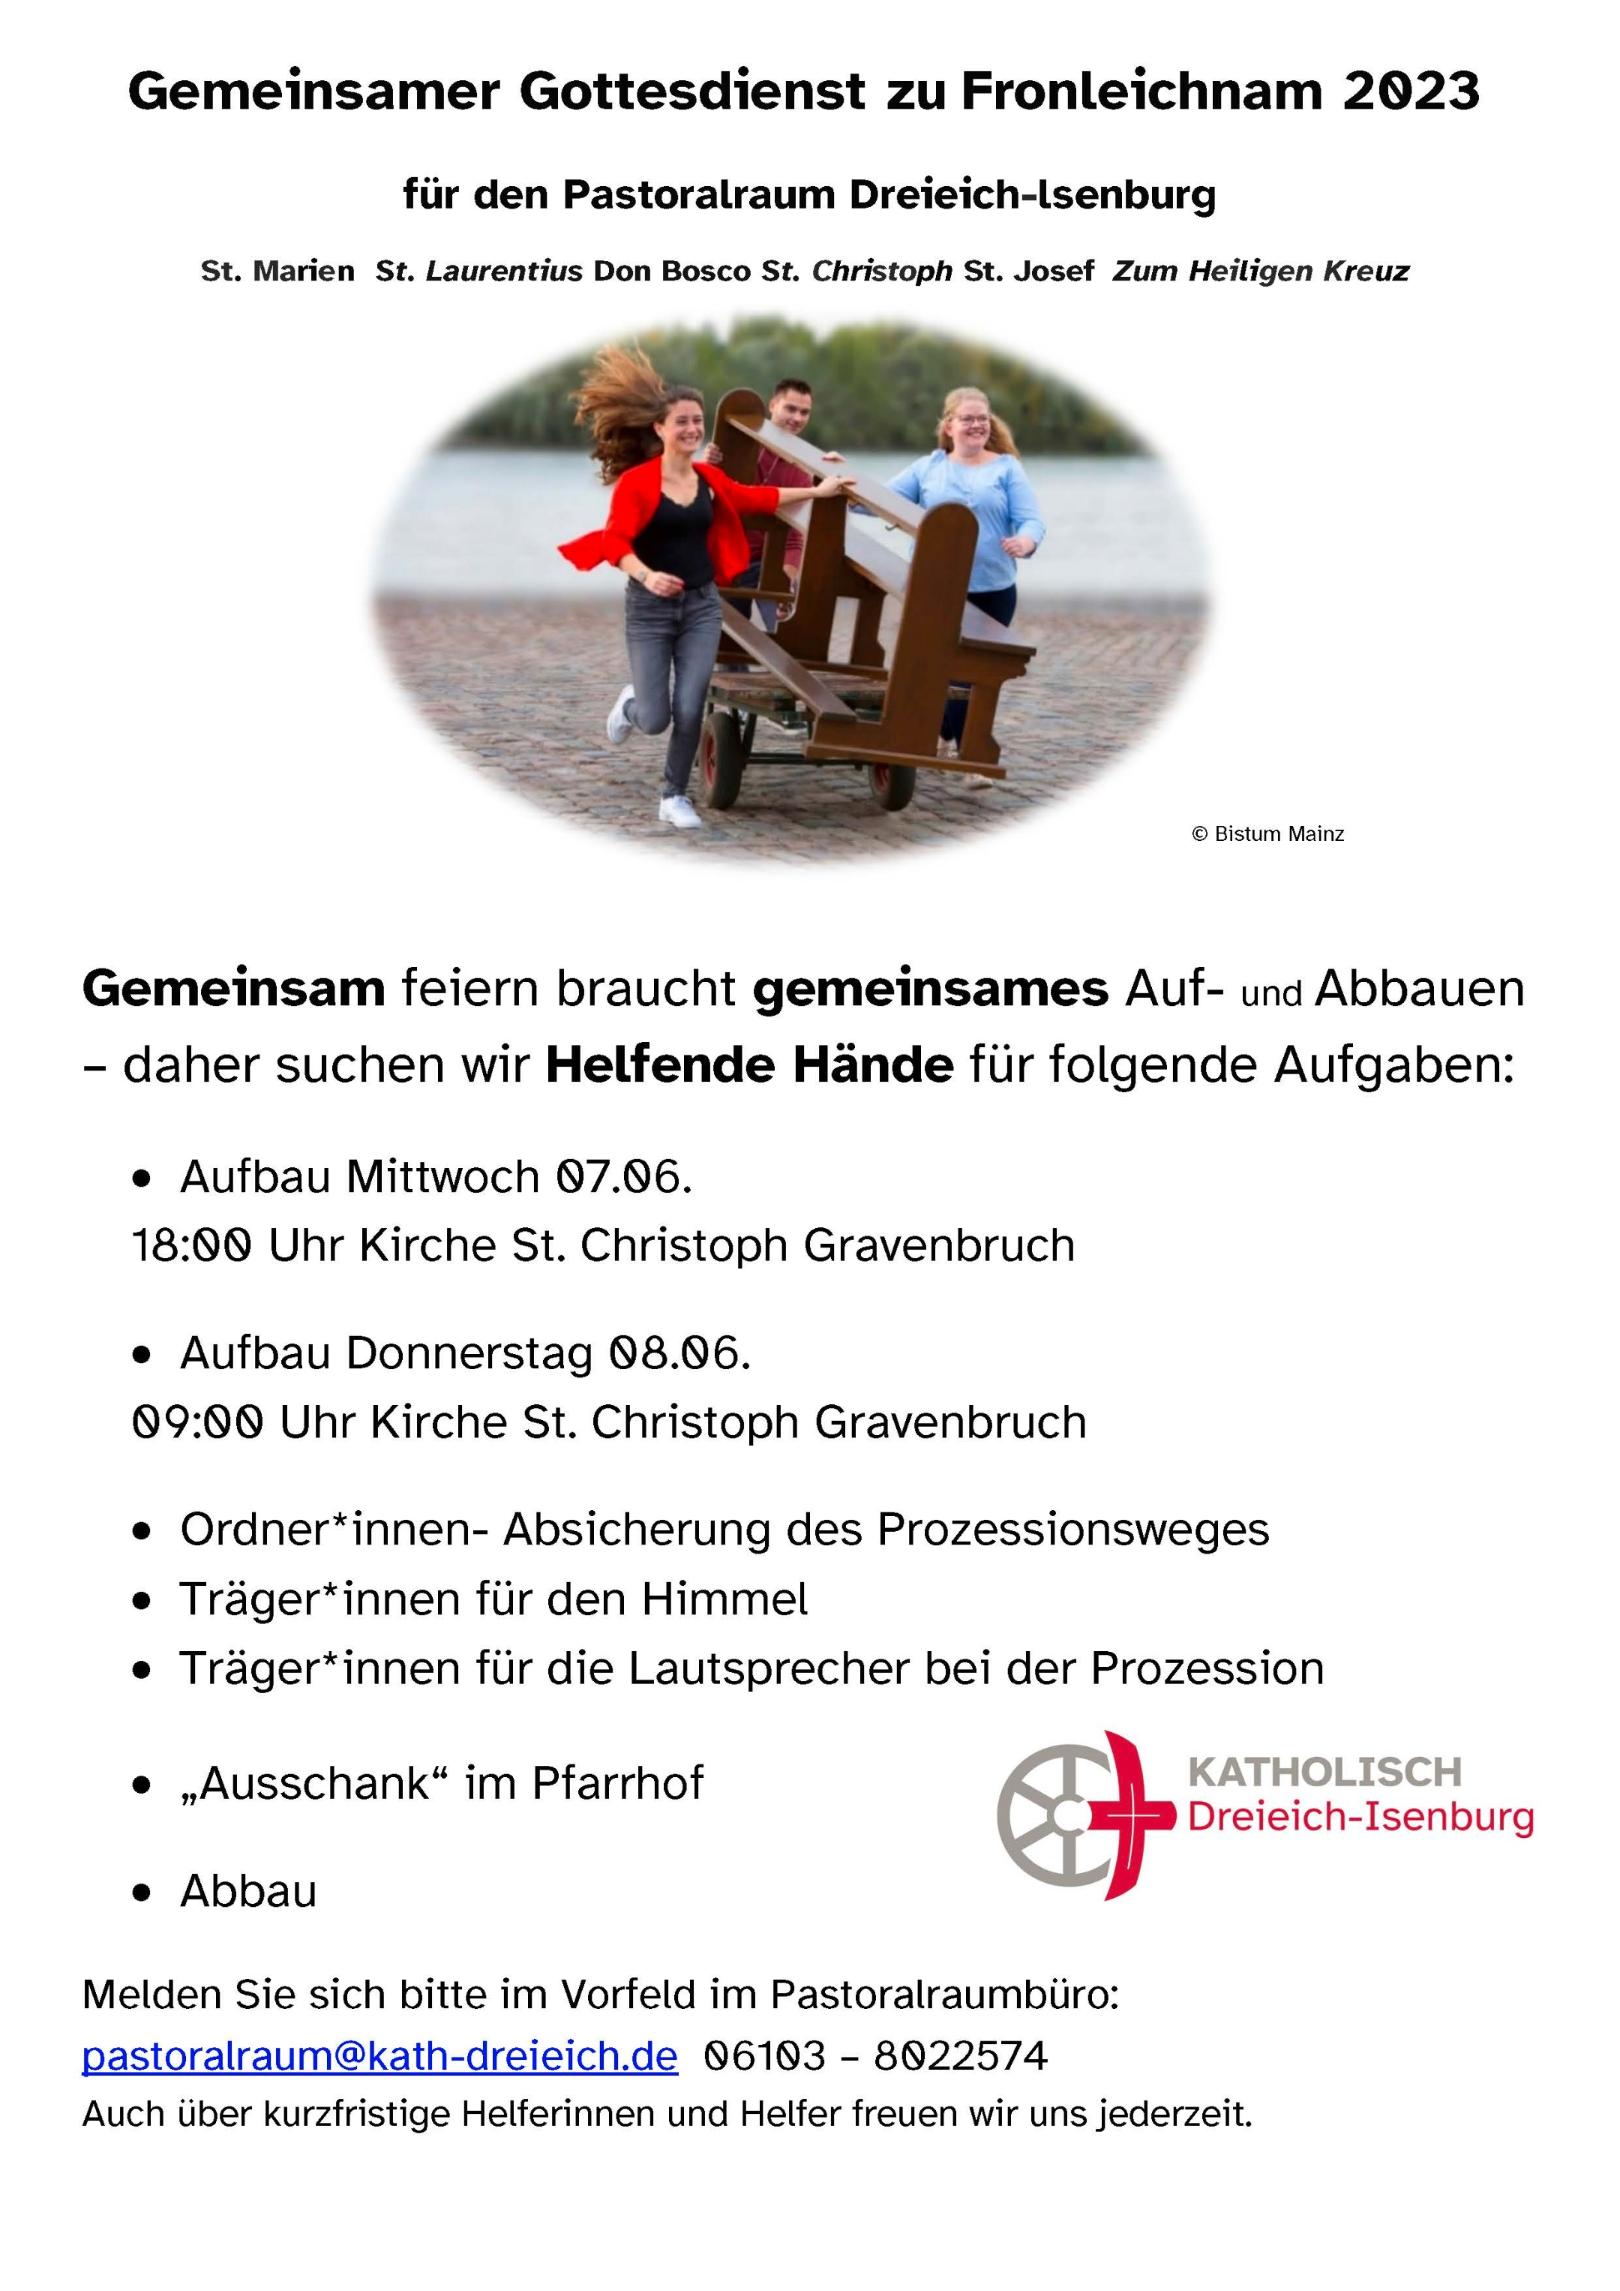 Helfendenaufruf-Plakat (c) S. Mohr